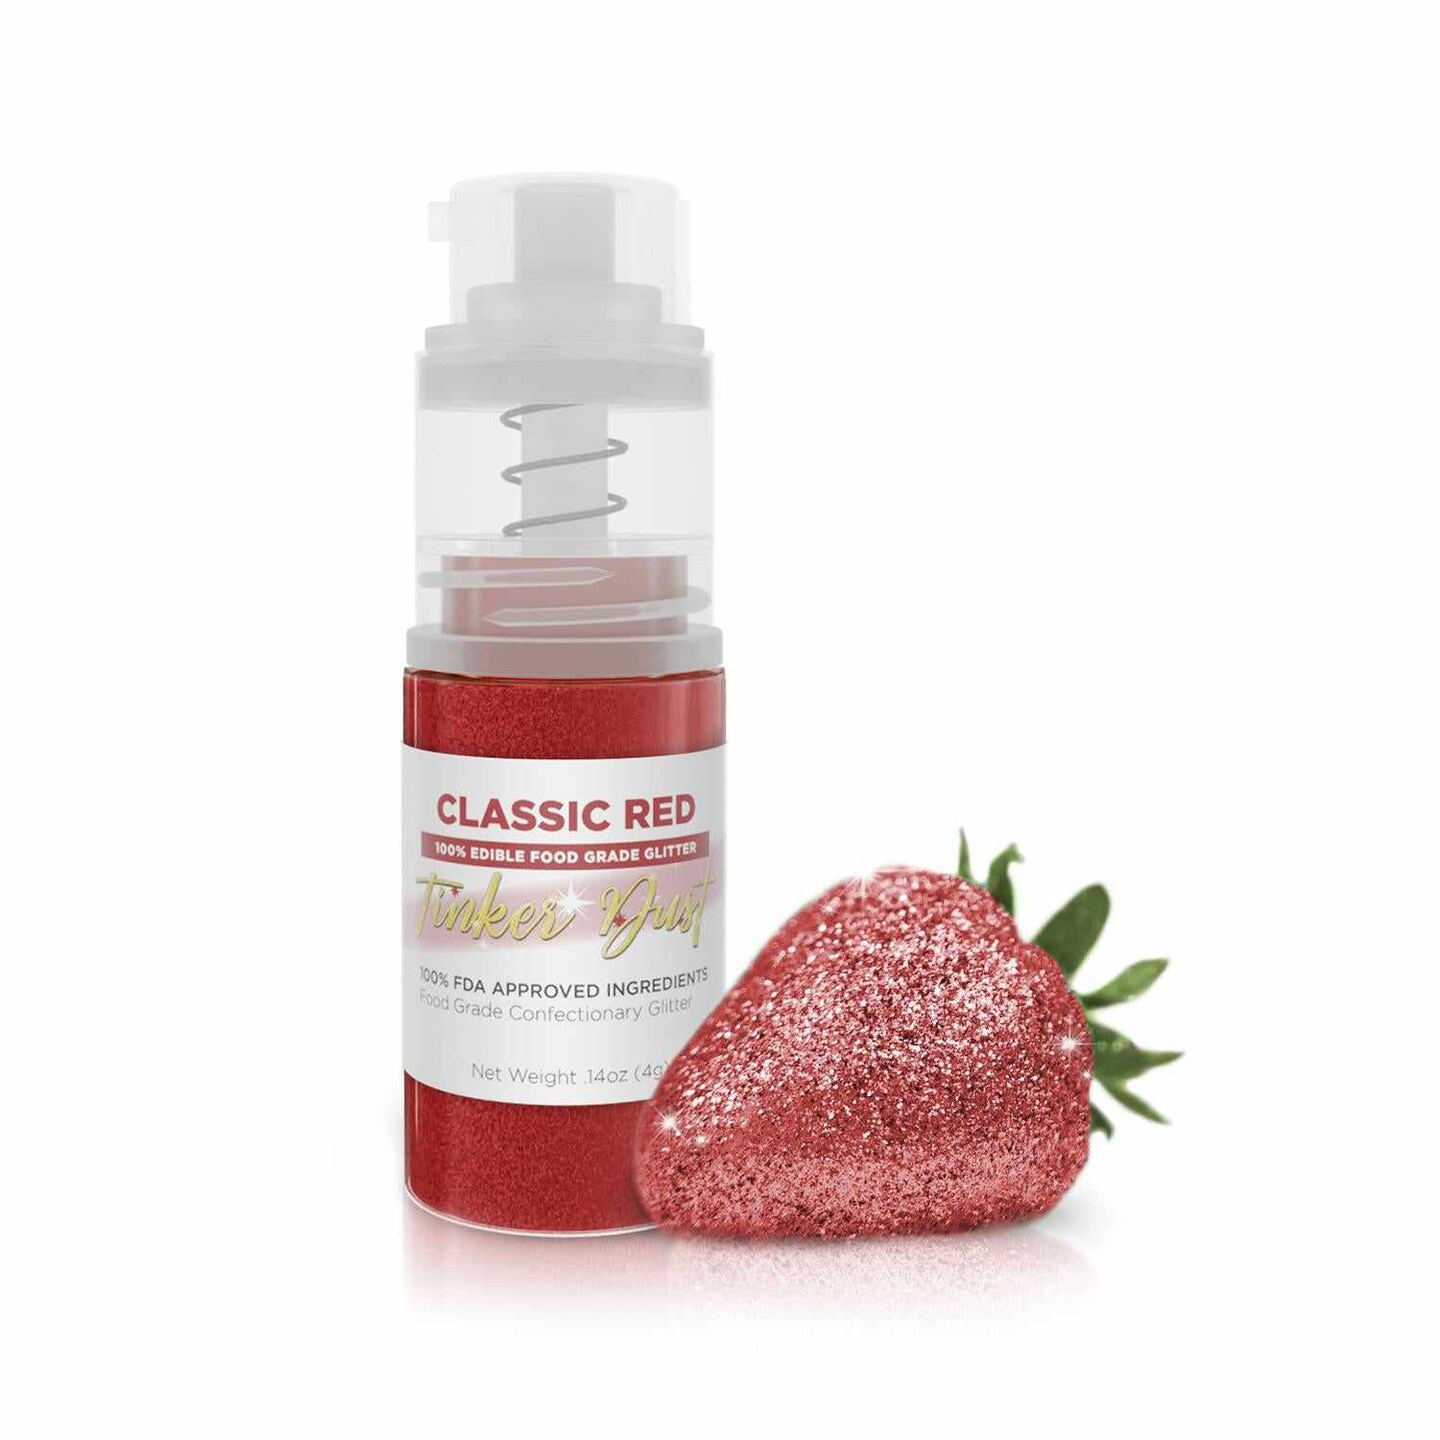 Classic Red Edible Glitter Spray - Edible Powder Dust Spray Glitter for Food, Drinks, Strawberries, Muffins, Cake Decorating. FDA Compliant (4 Gram Pump)